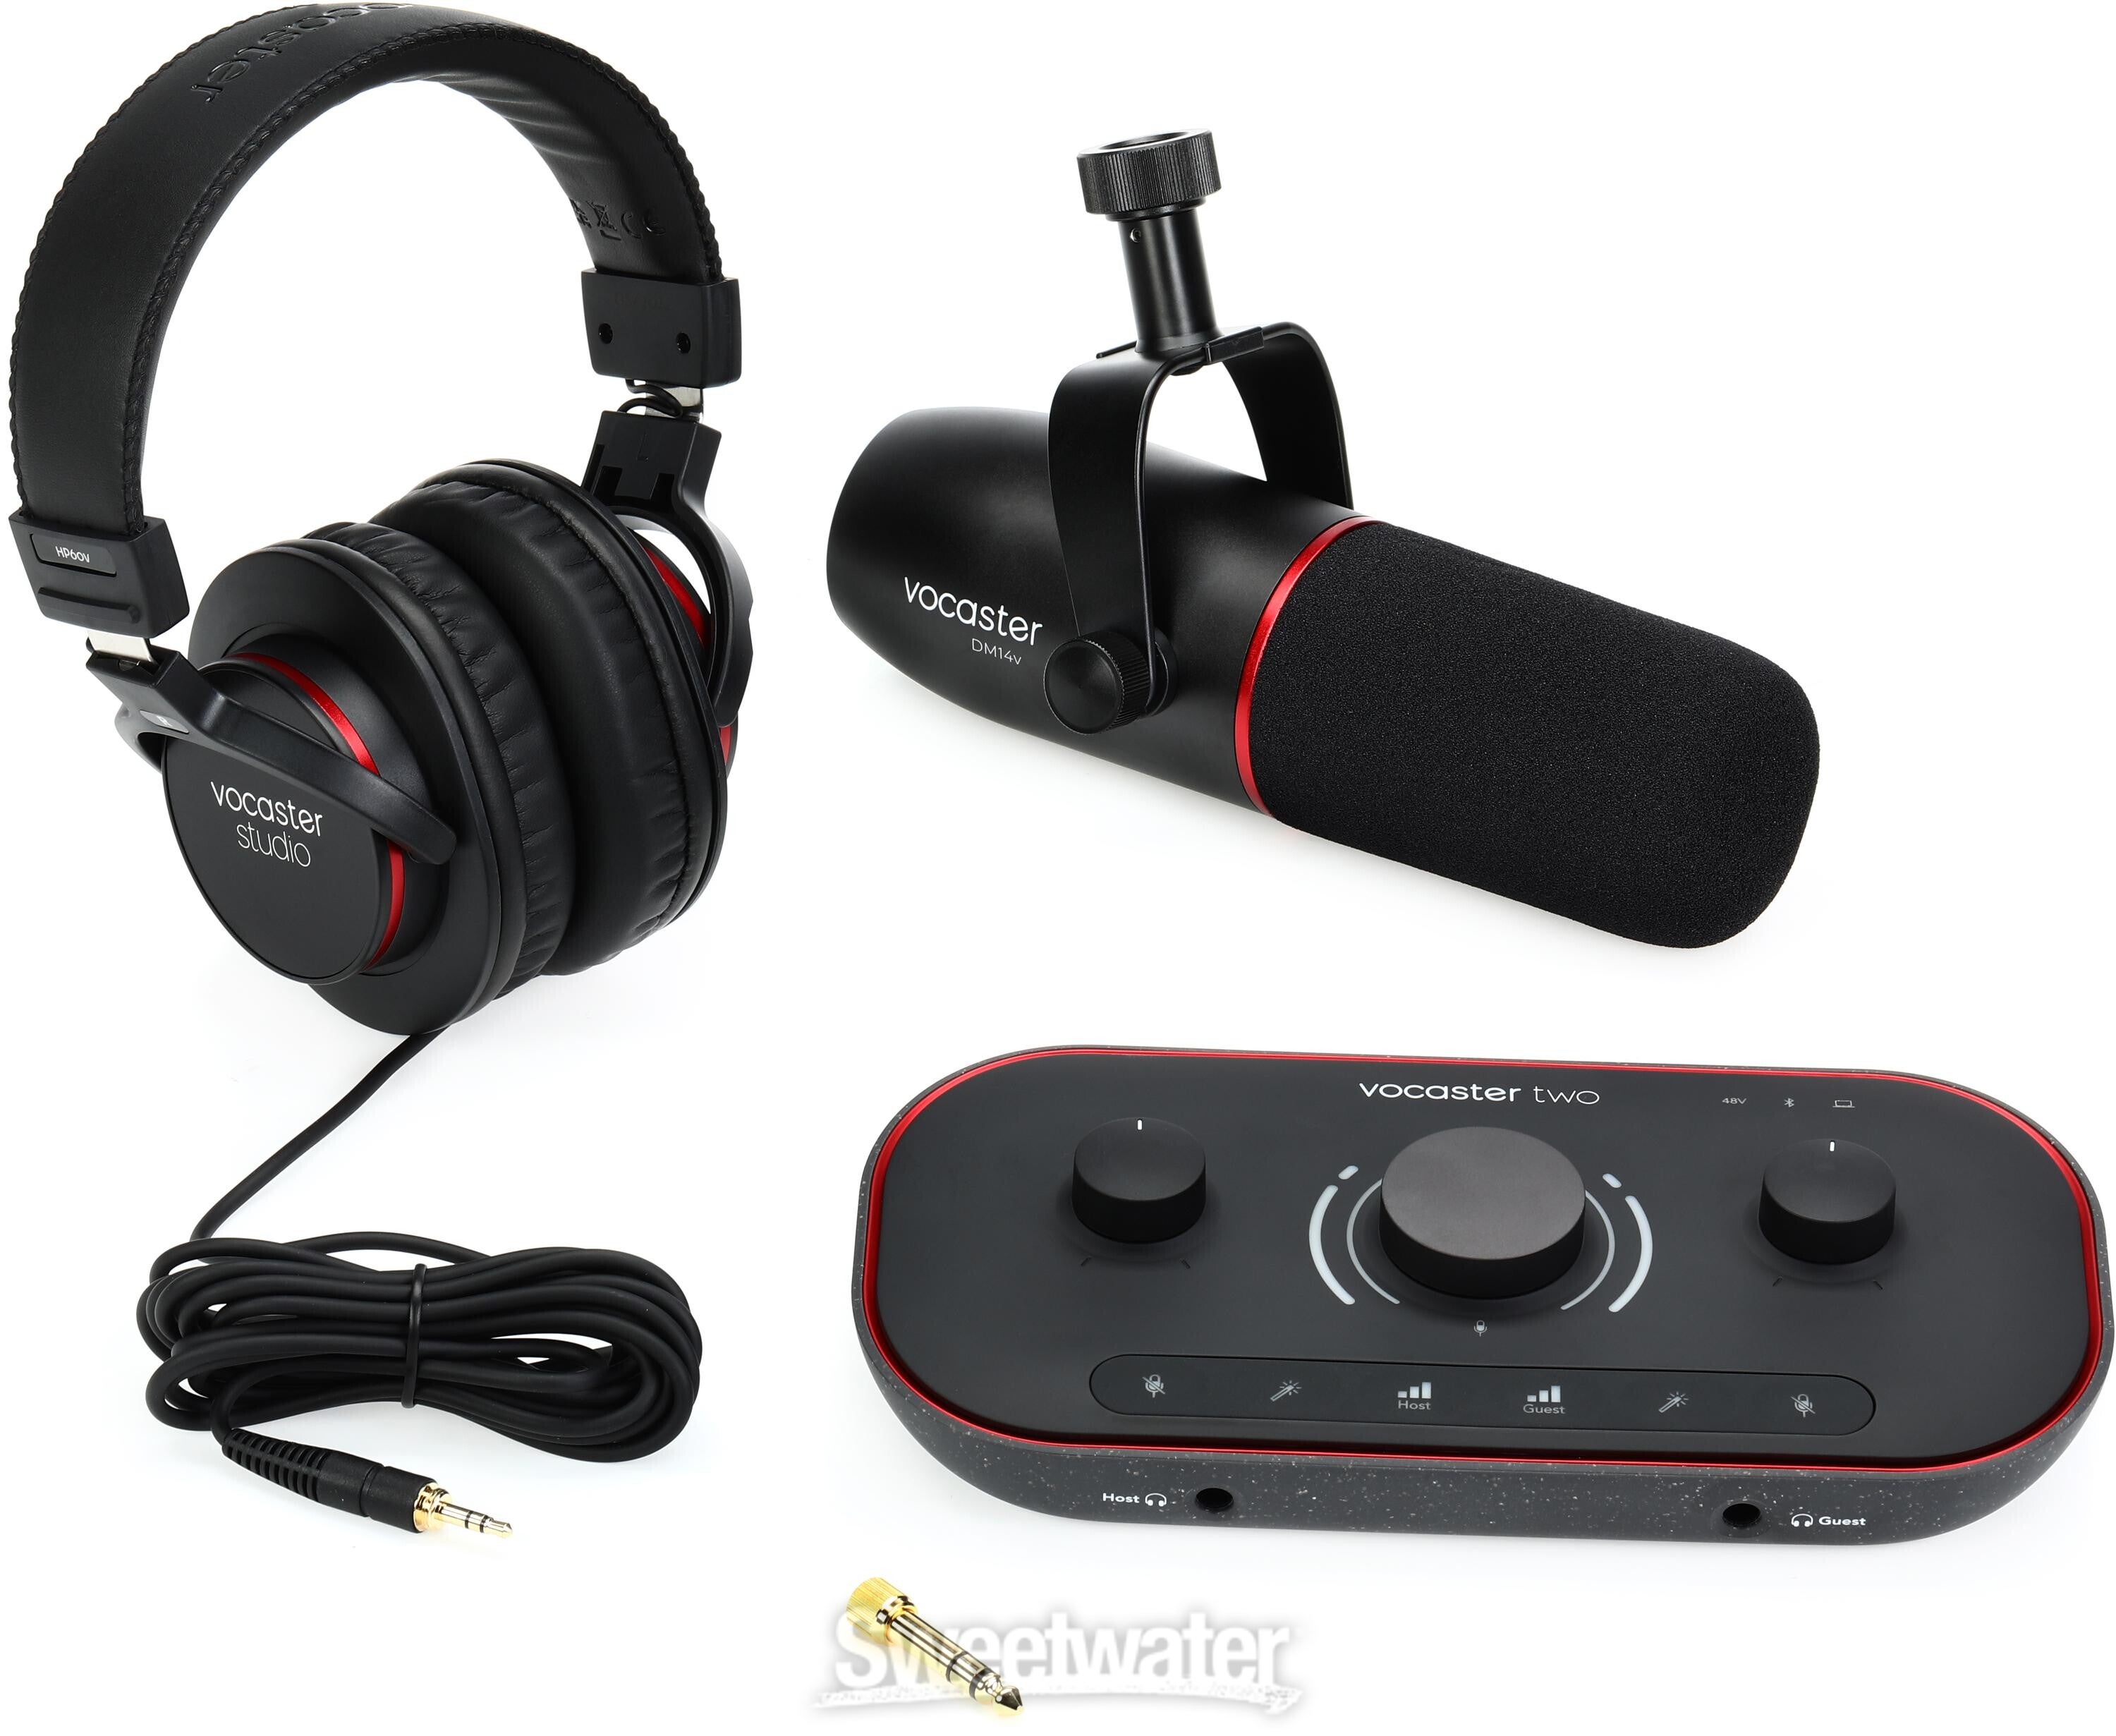 Focusrite Vocaster Two Studio USB-C Podcasting Audio Interface